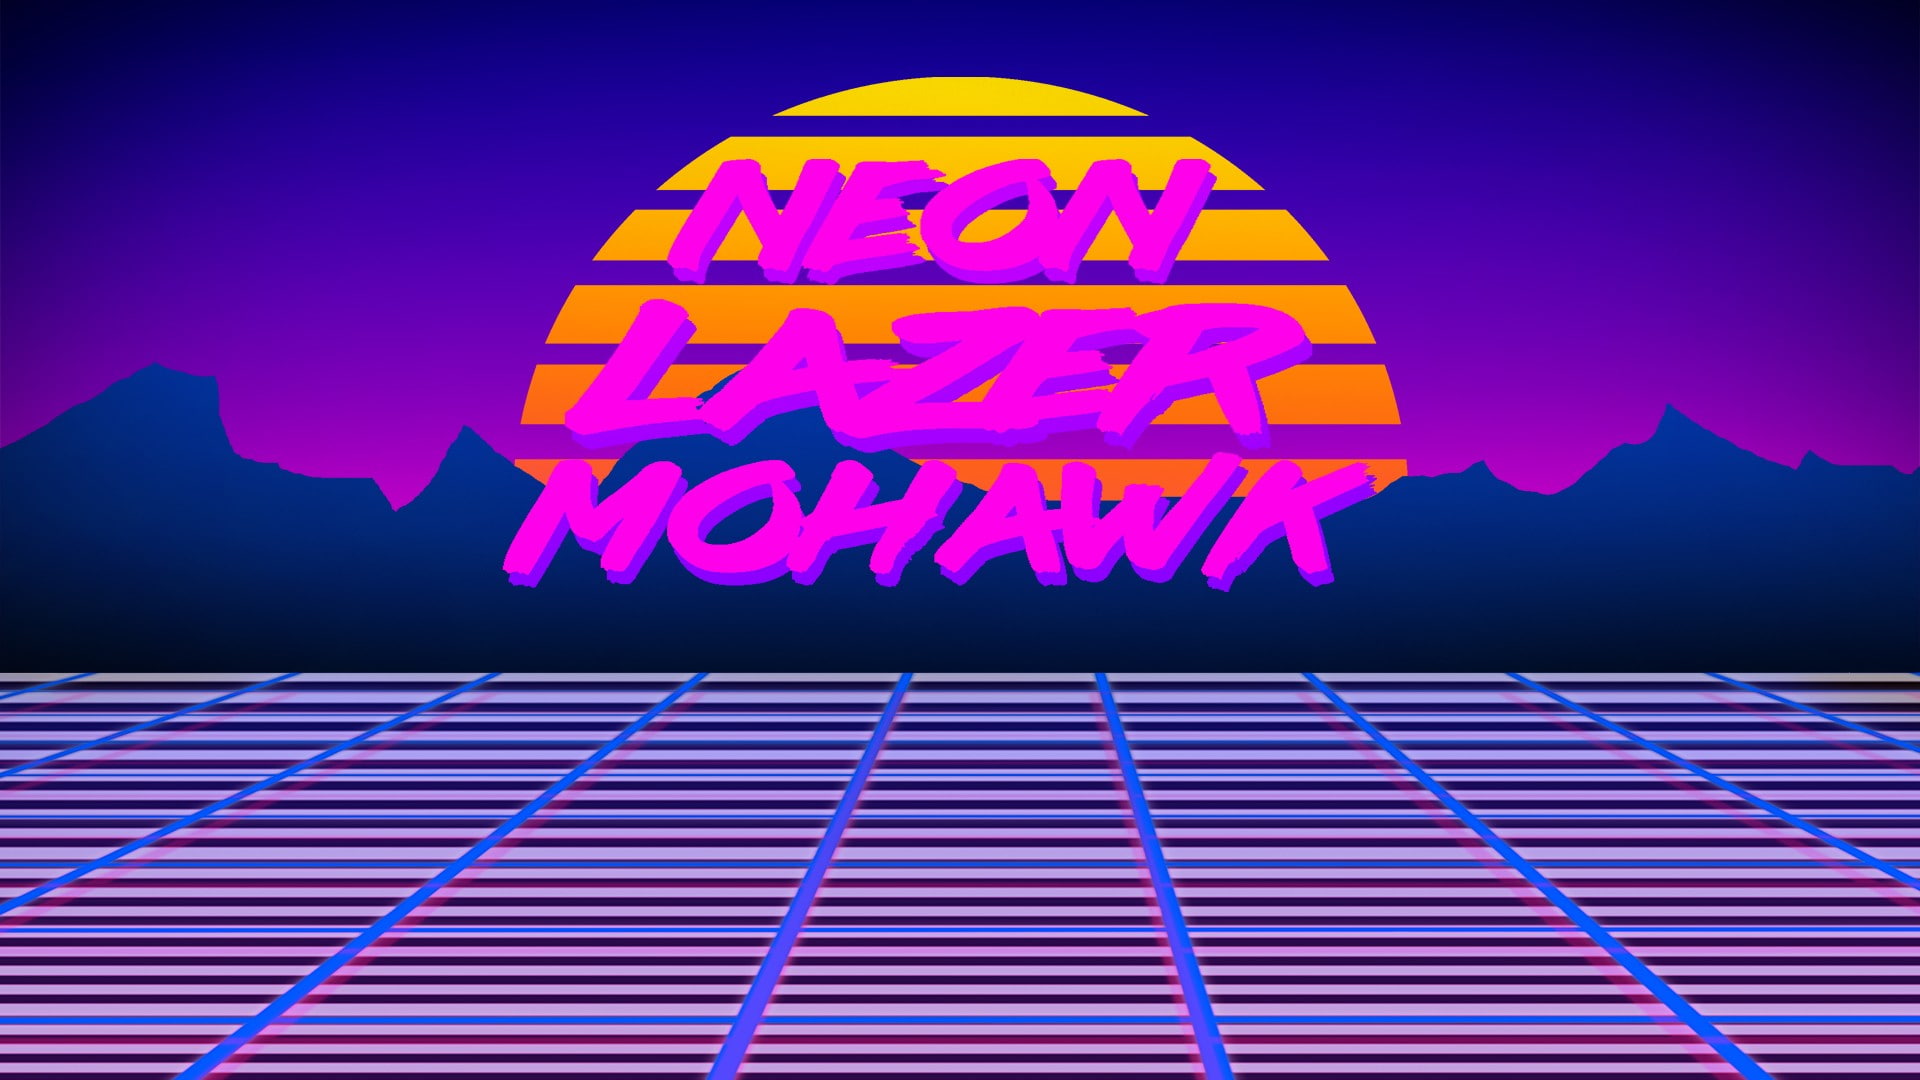 neon lazer mohawk 1980s retro games robot grid digital art sunset sun colorful text